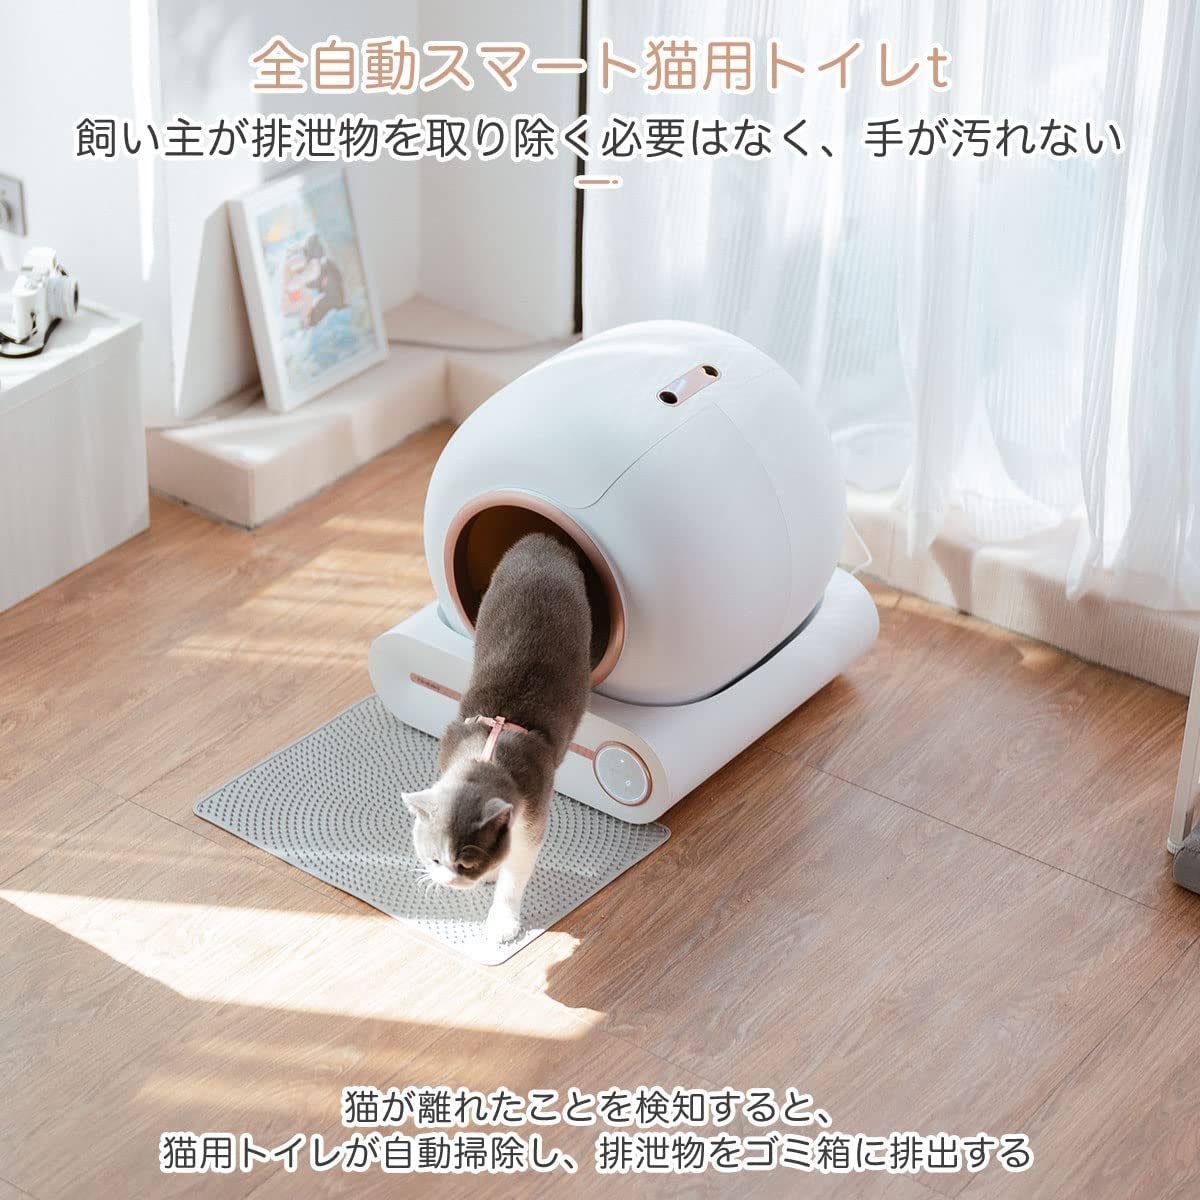 PETKIT 猫自動トイレ - 猫用品